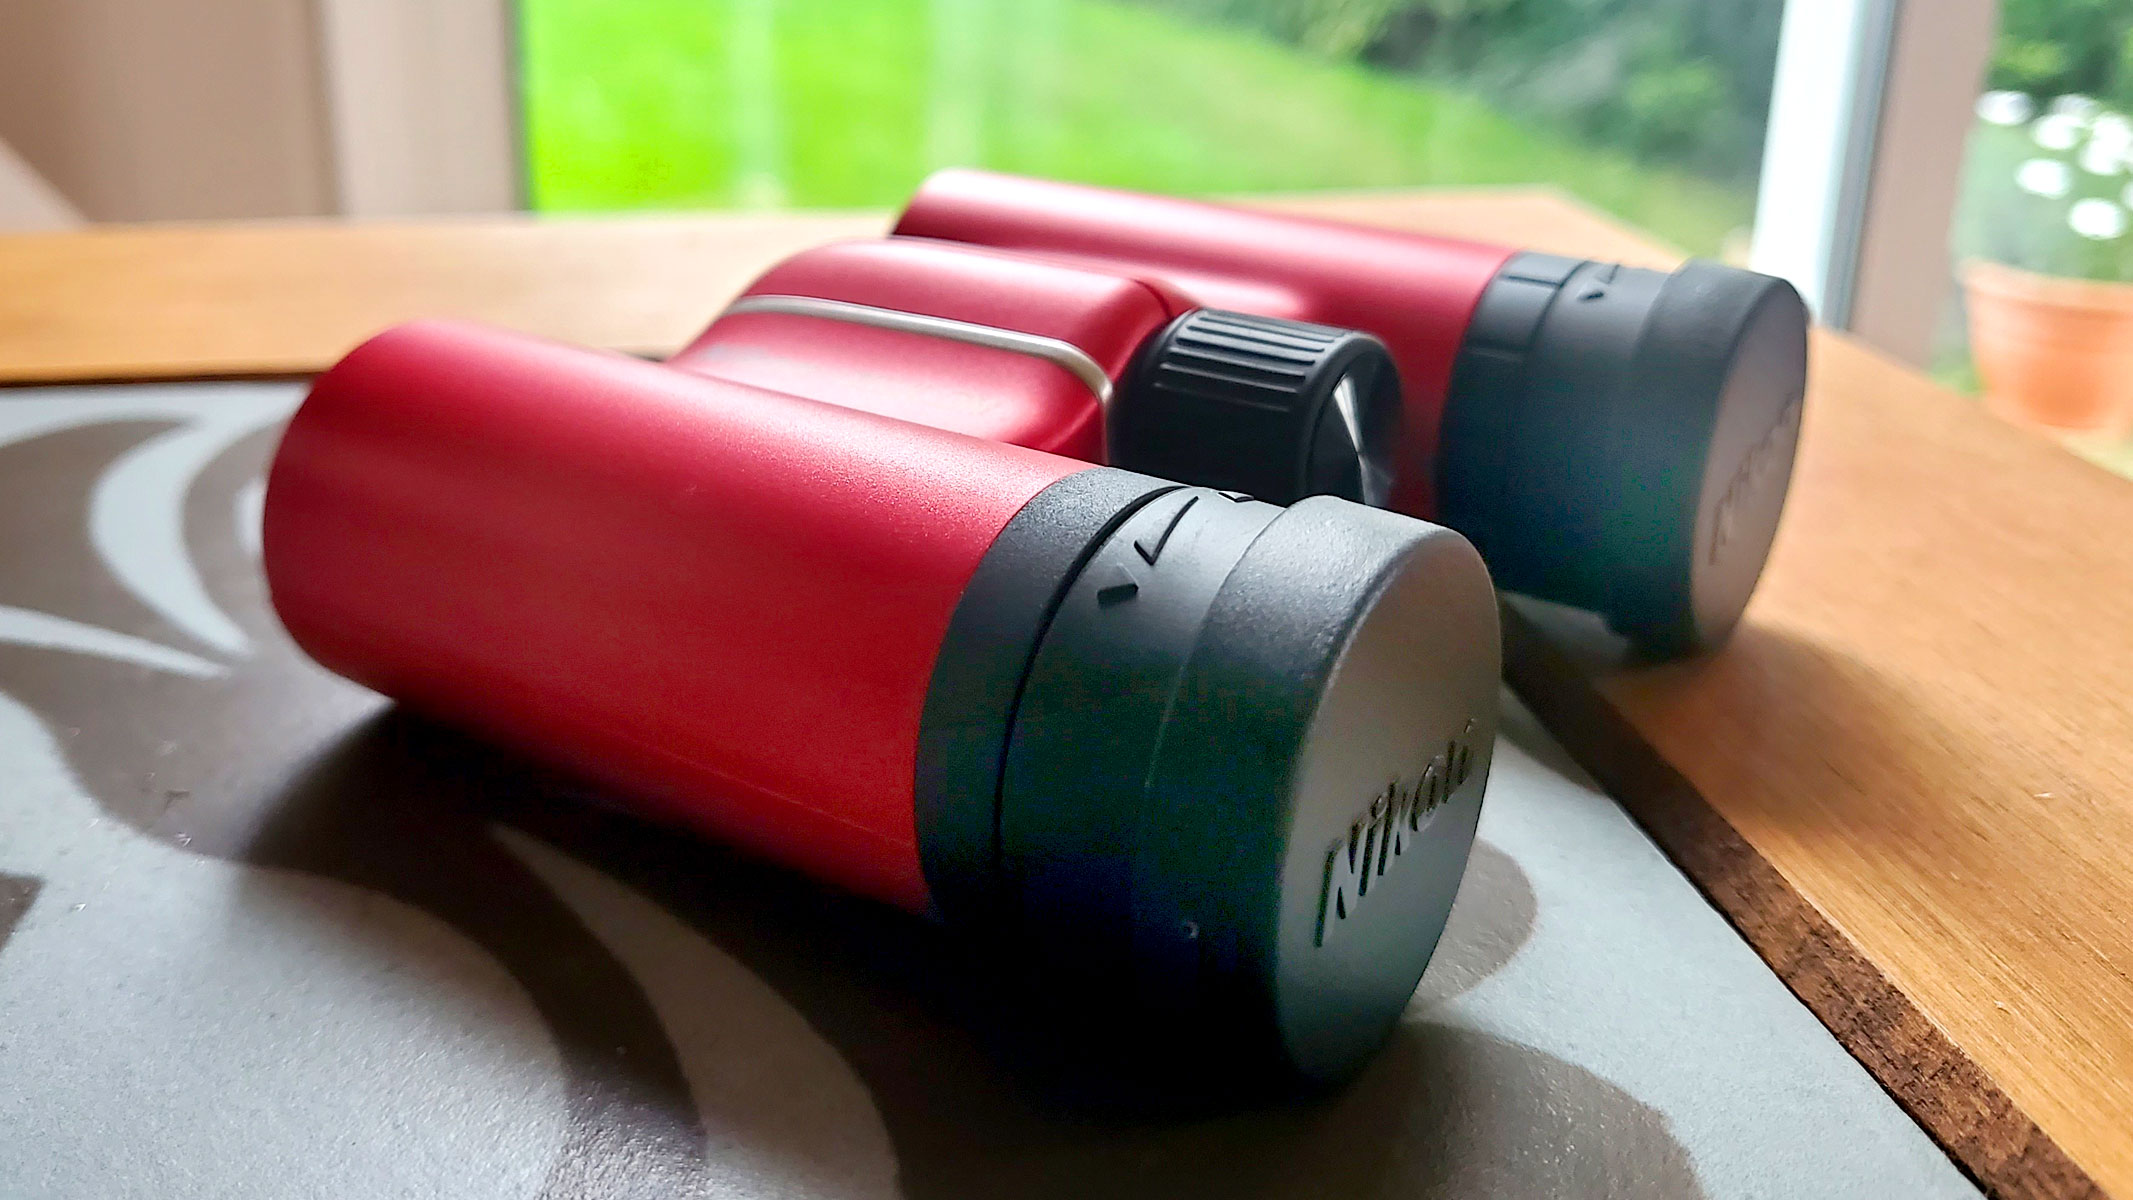  Nikon Aculon T02 8x21 binocular review 